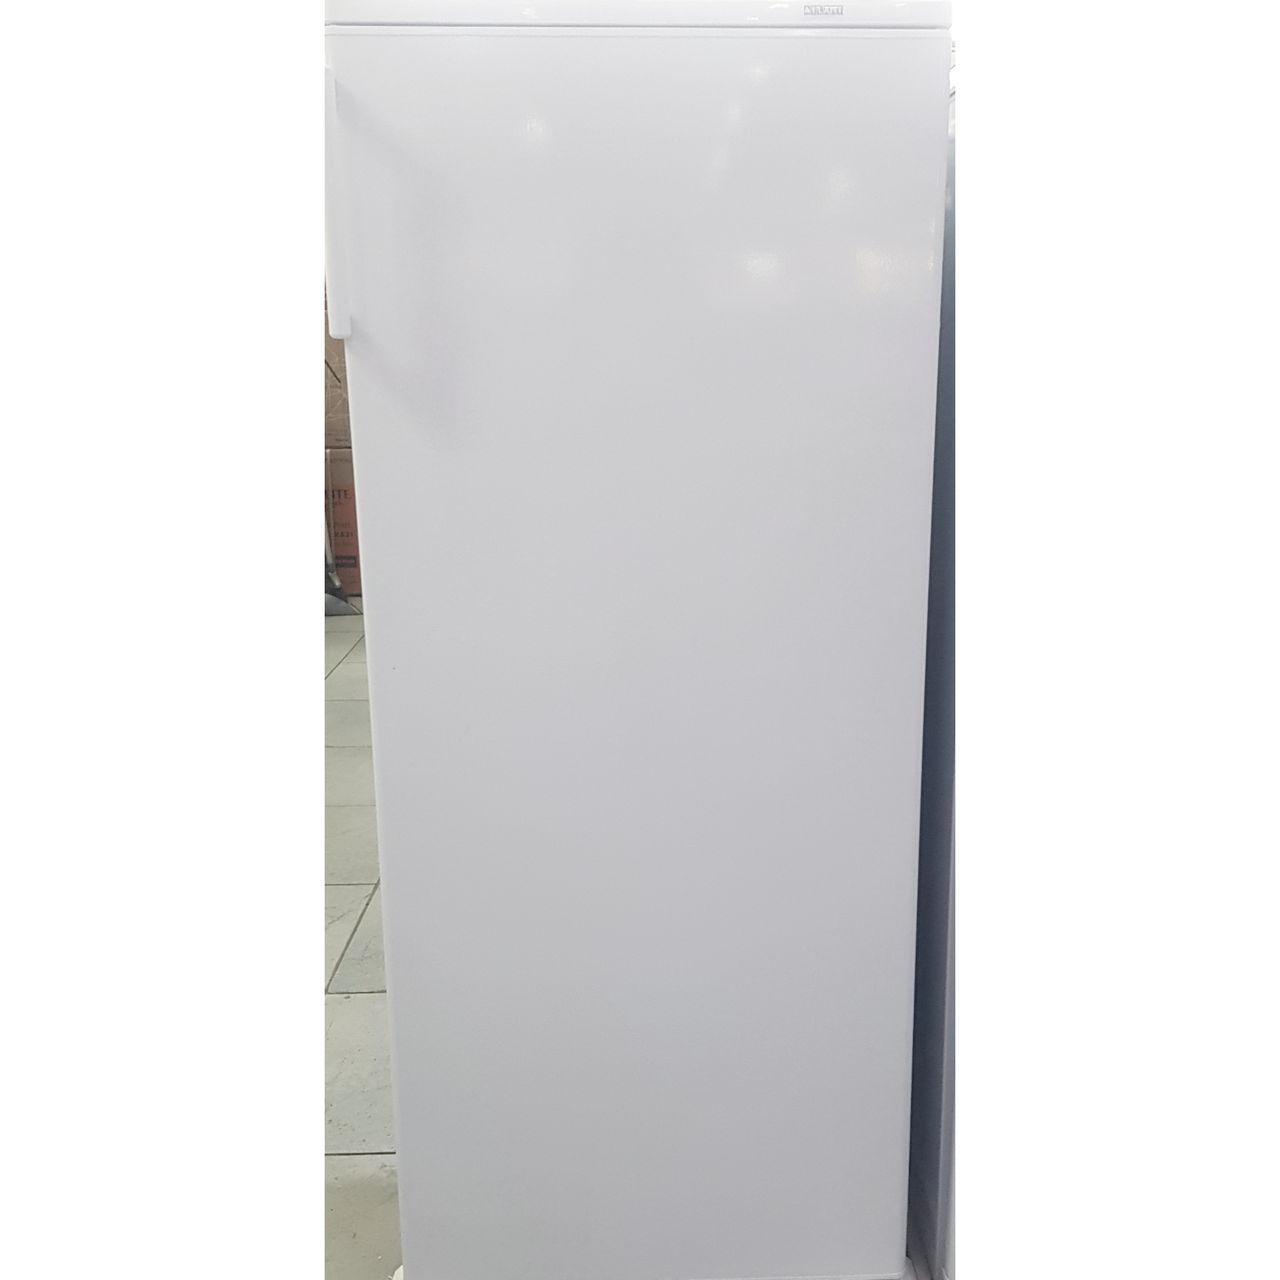 Холодильник однокамерный Atlant MX-5810-62 280 л